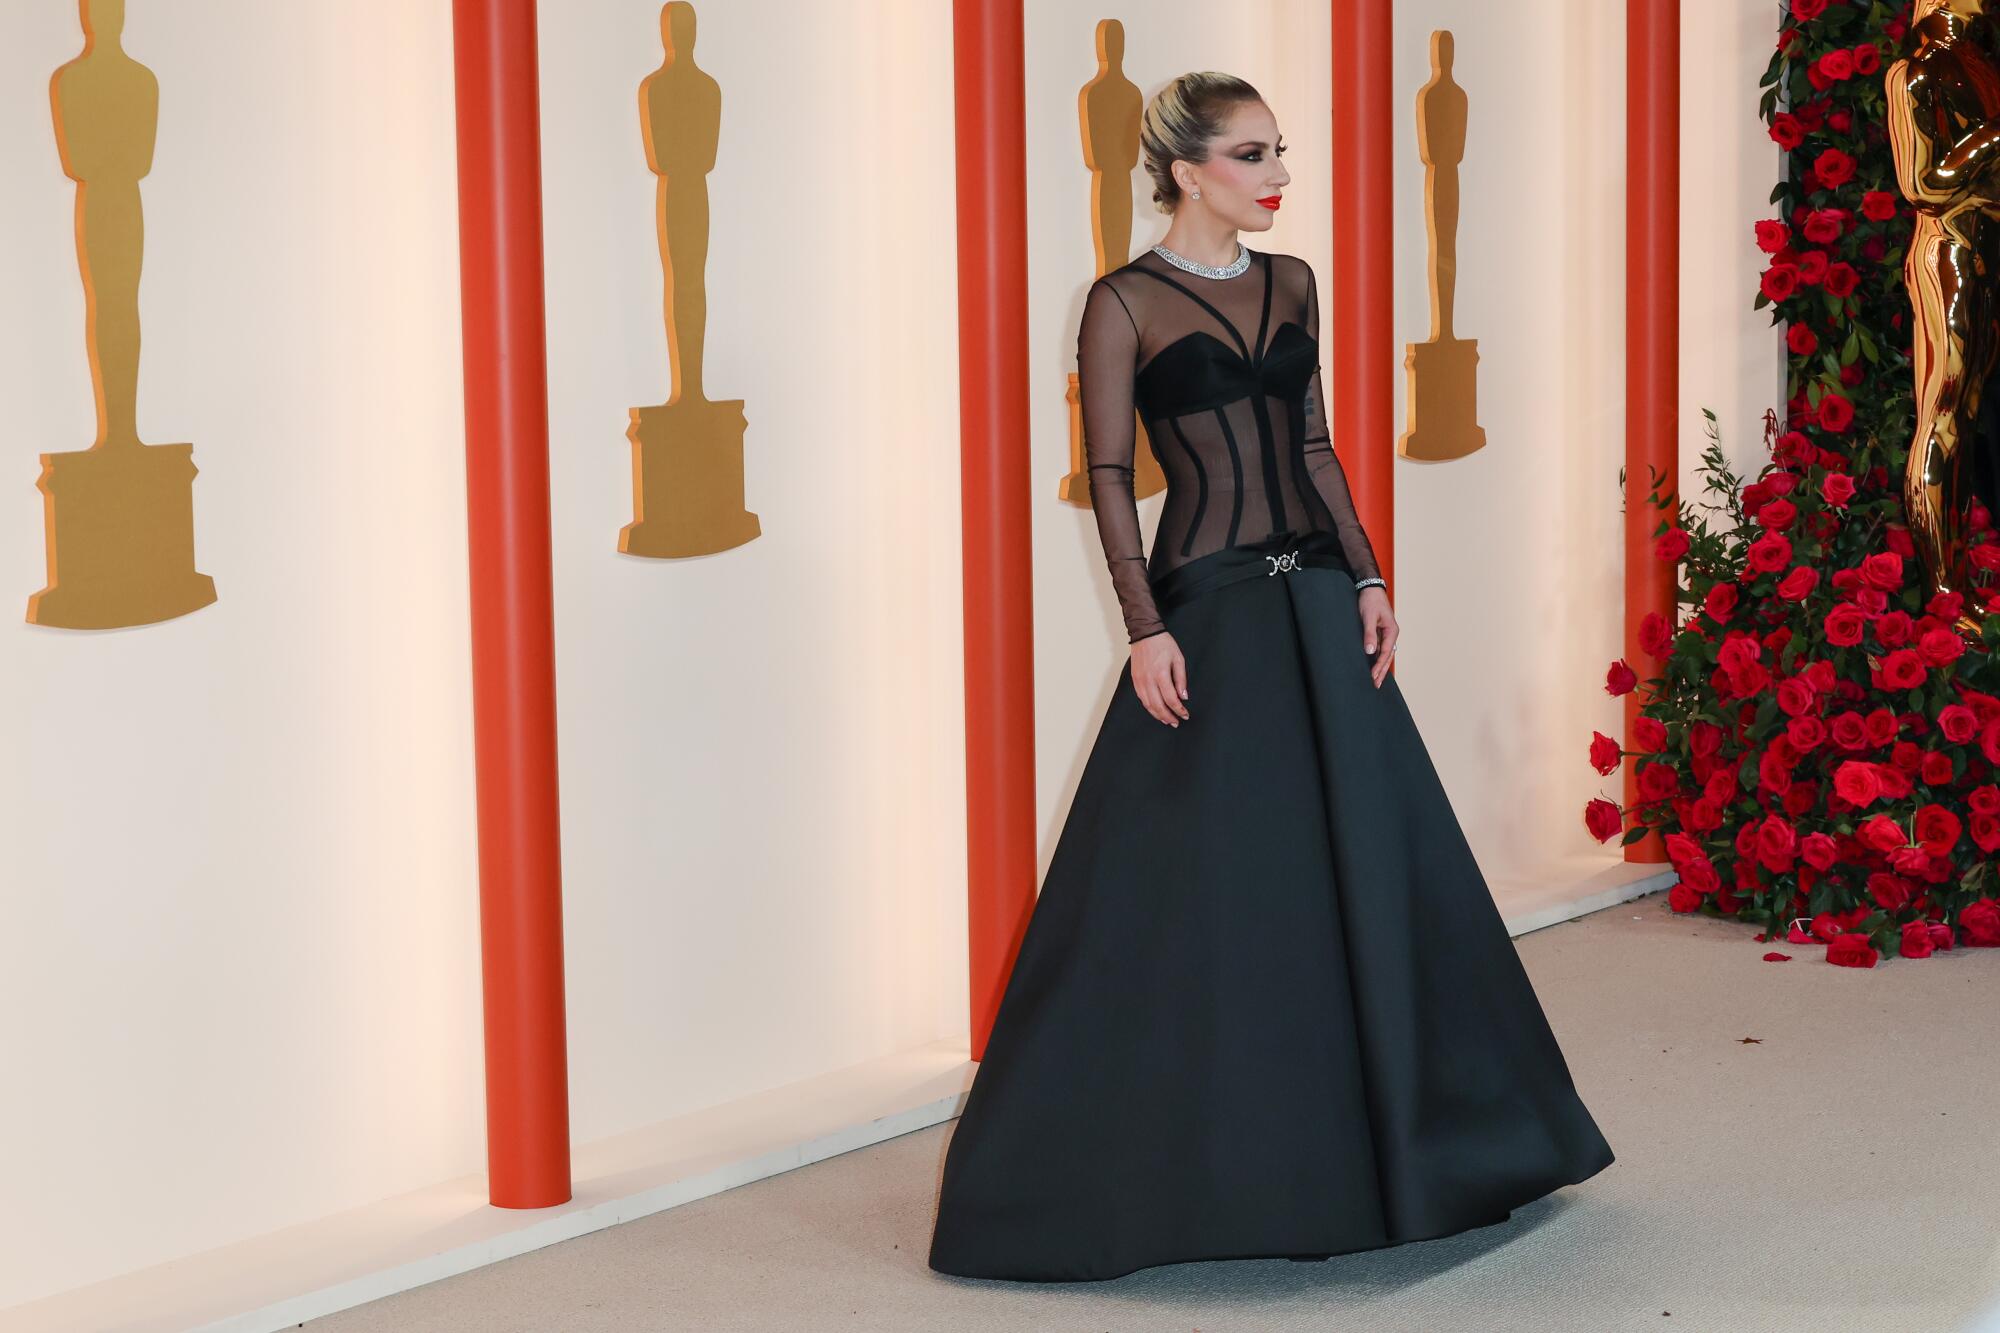 Hollywood Royalty: Michael B. Jordan's Iconic Tiffany Brooches at the Oscars